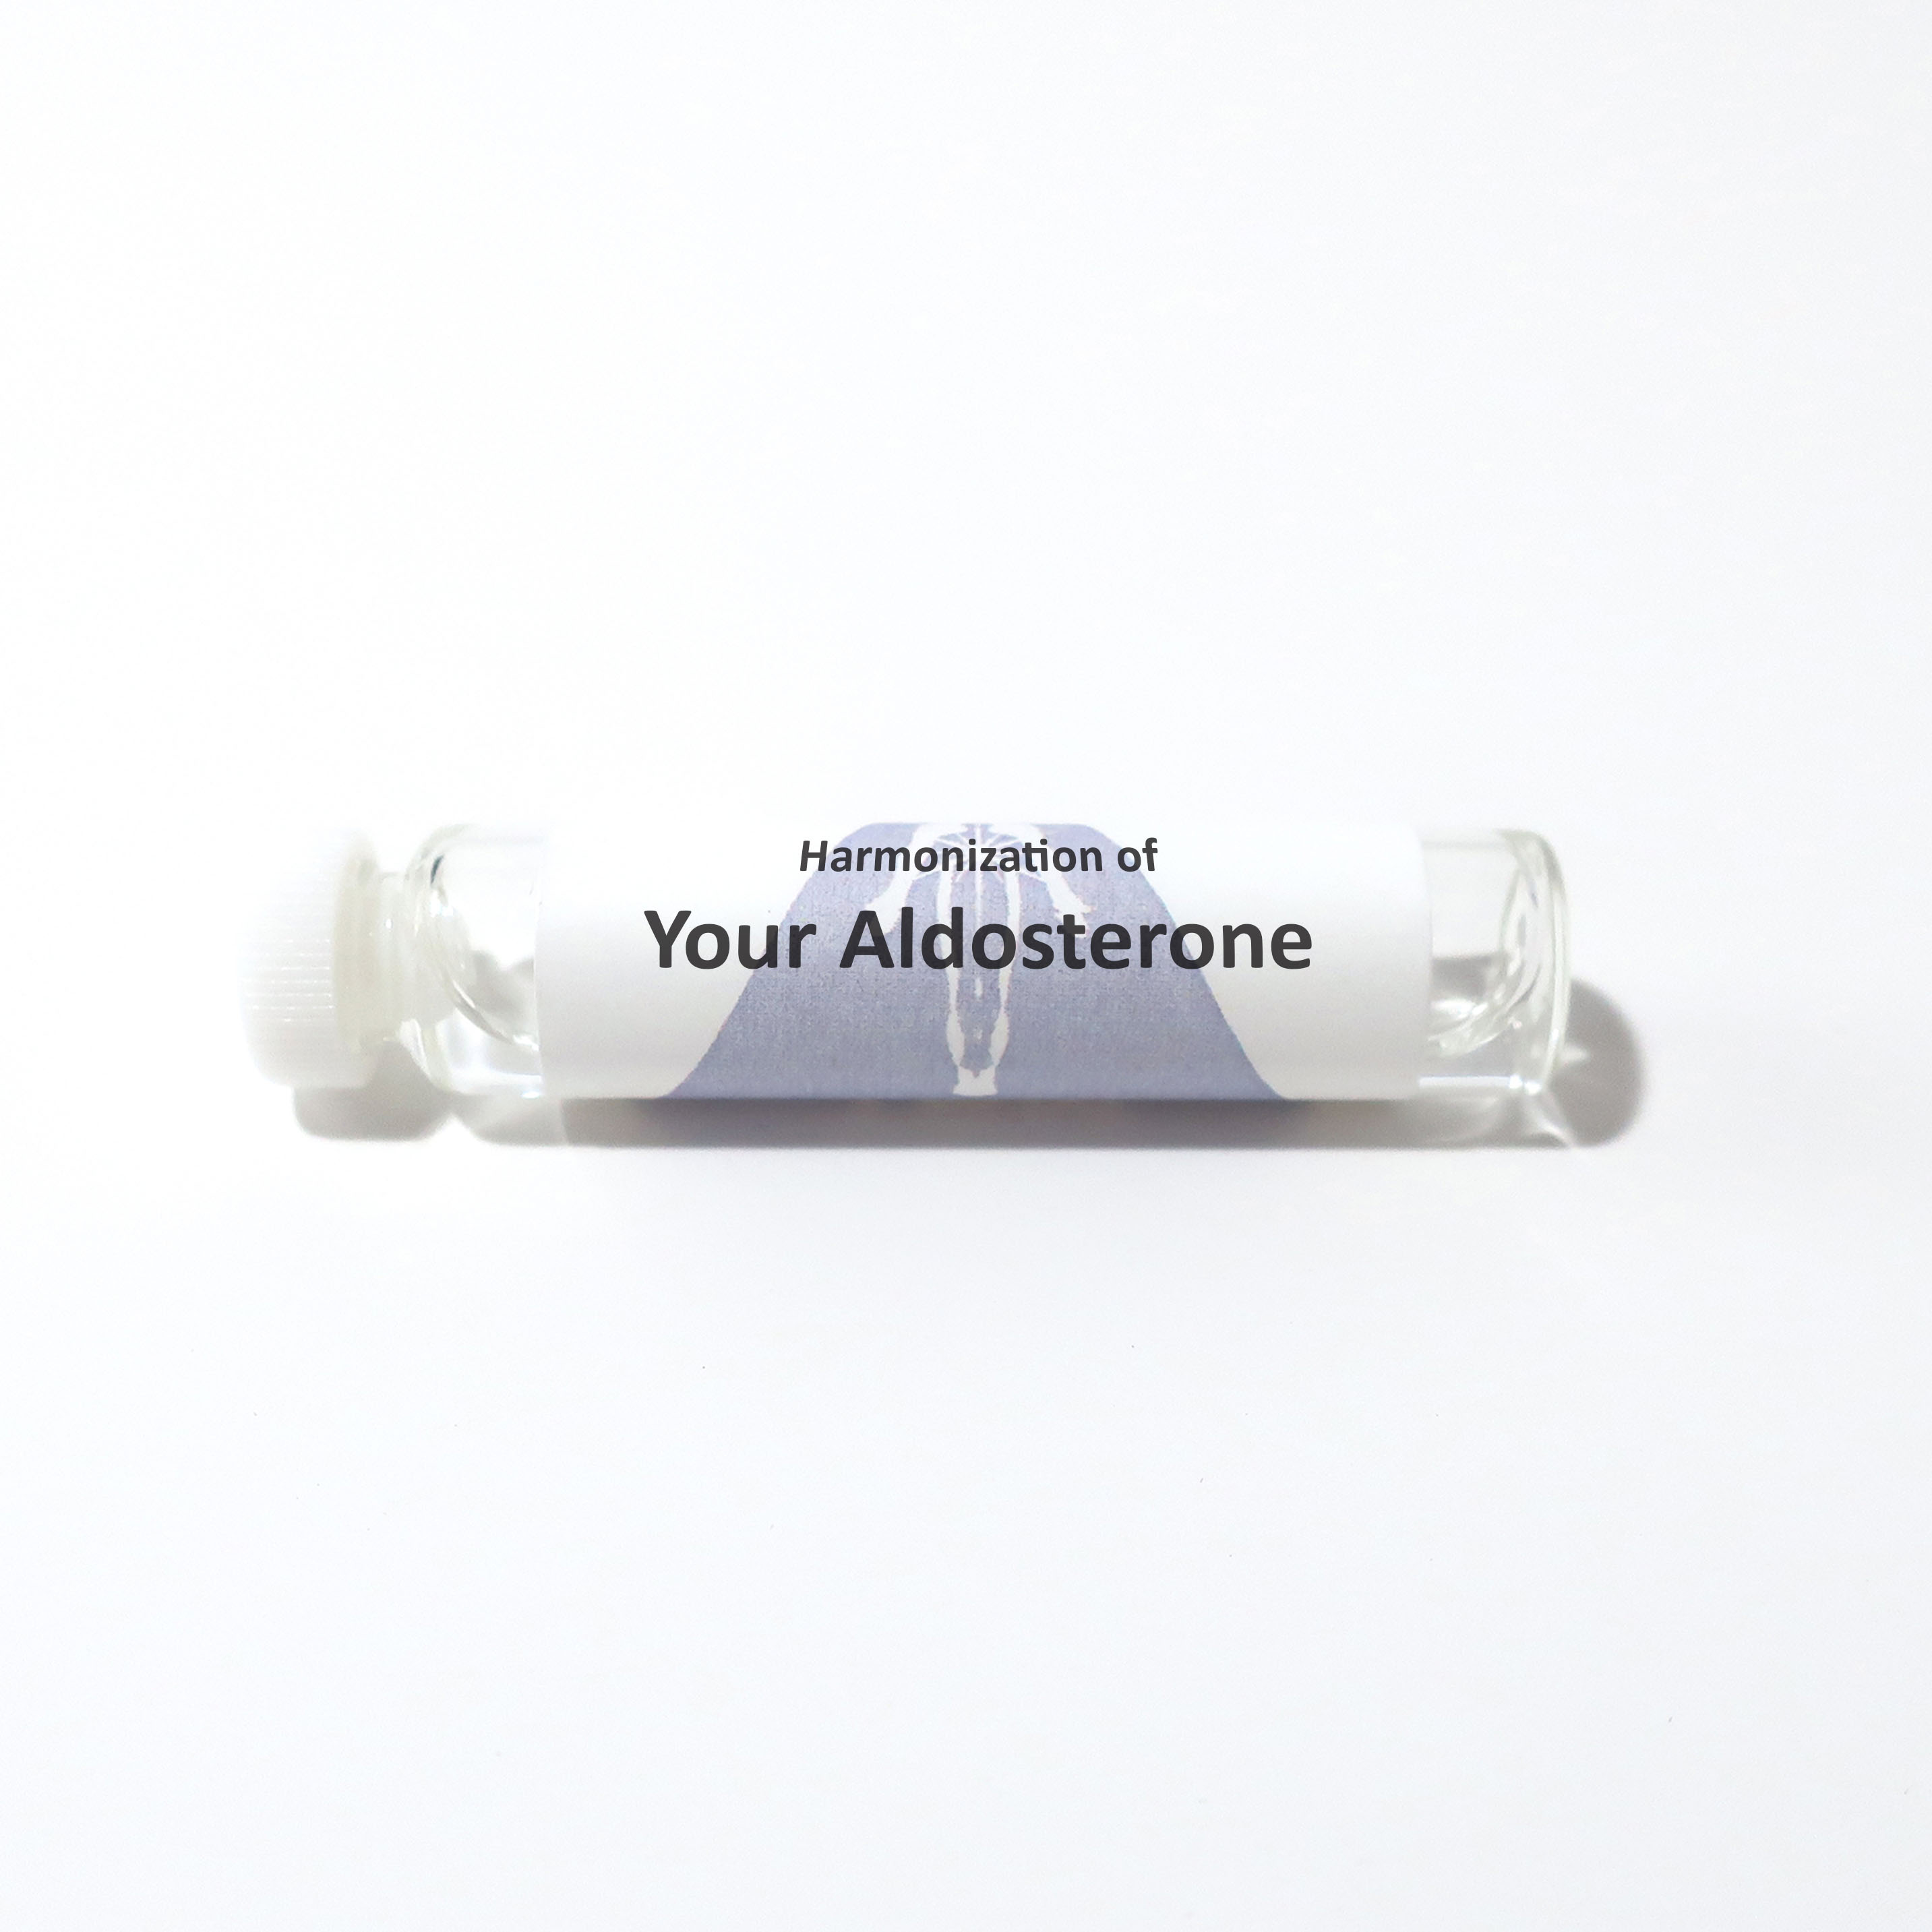 Your Aldosterone